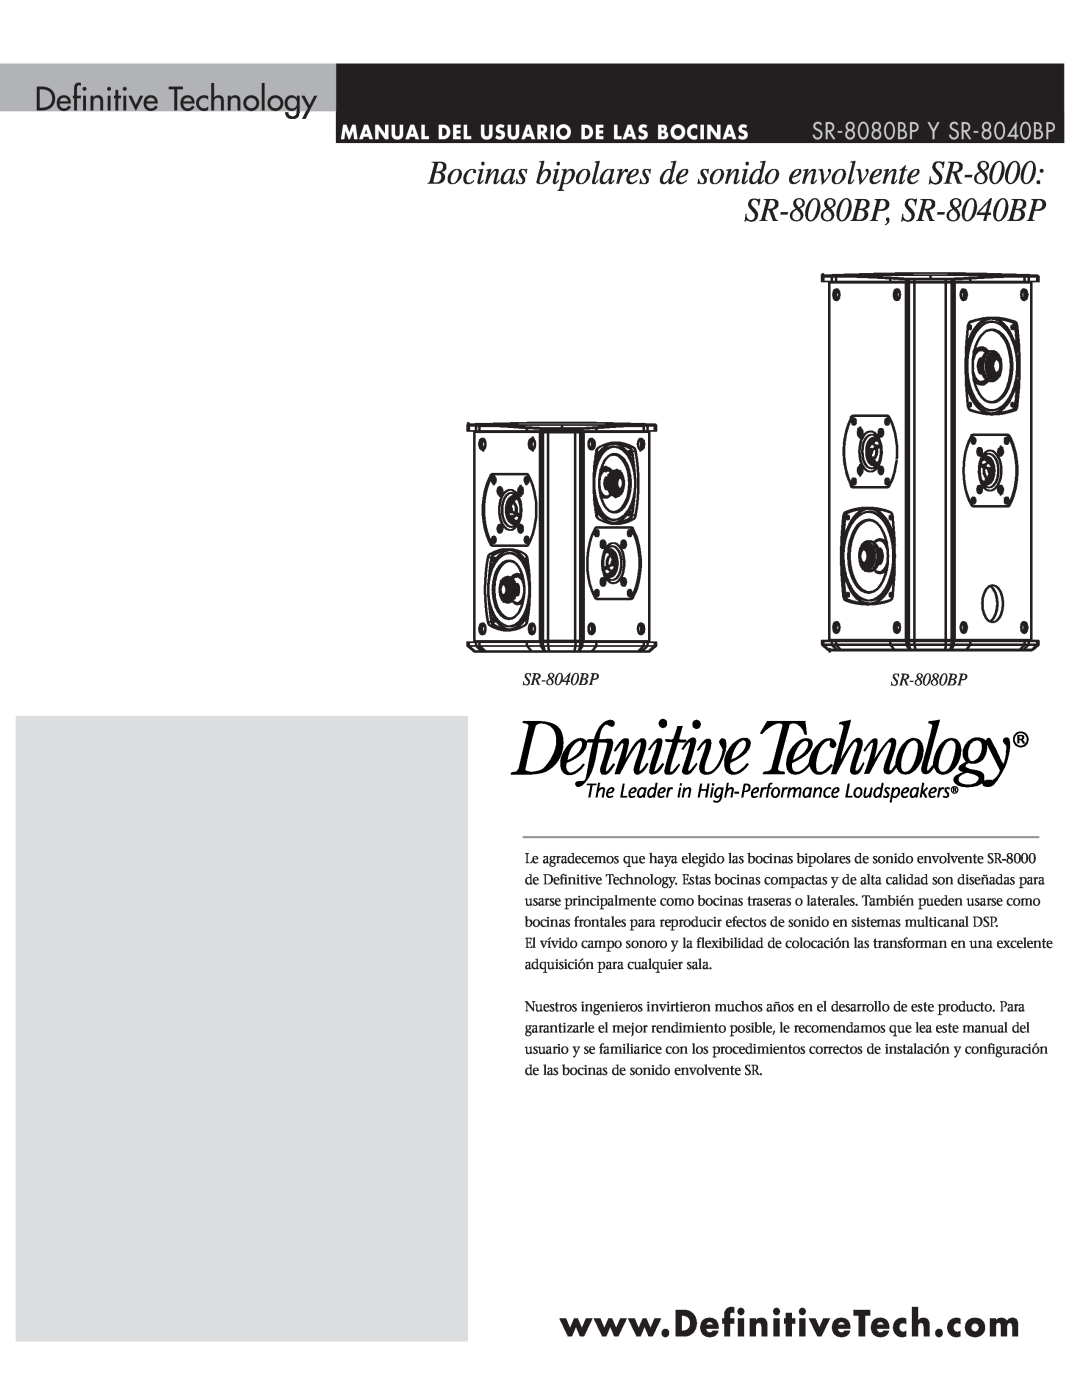 Definitive Technology owner manual Definitive Technology, Manual Del Usuario De Las Bocinas, SR-8080BPY SR-8040BP 